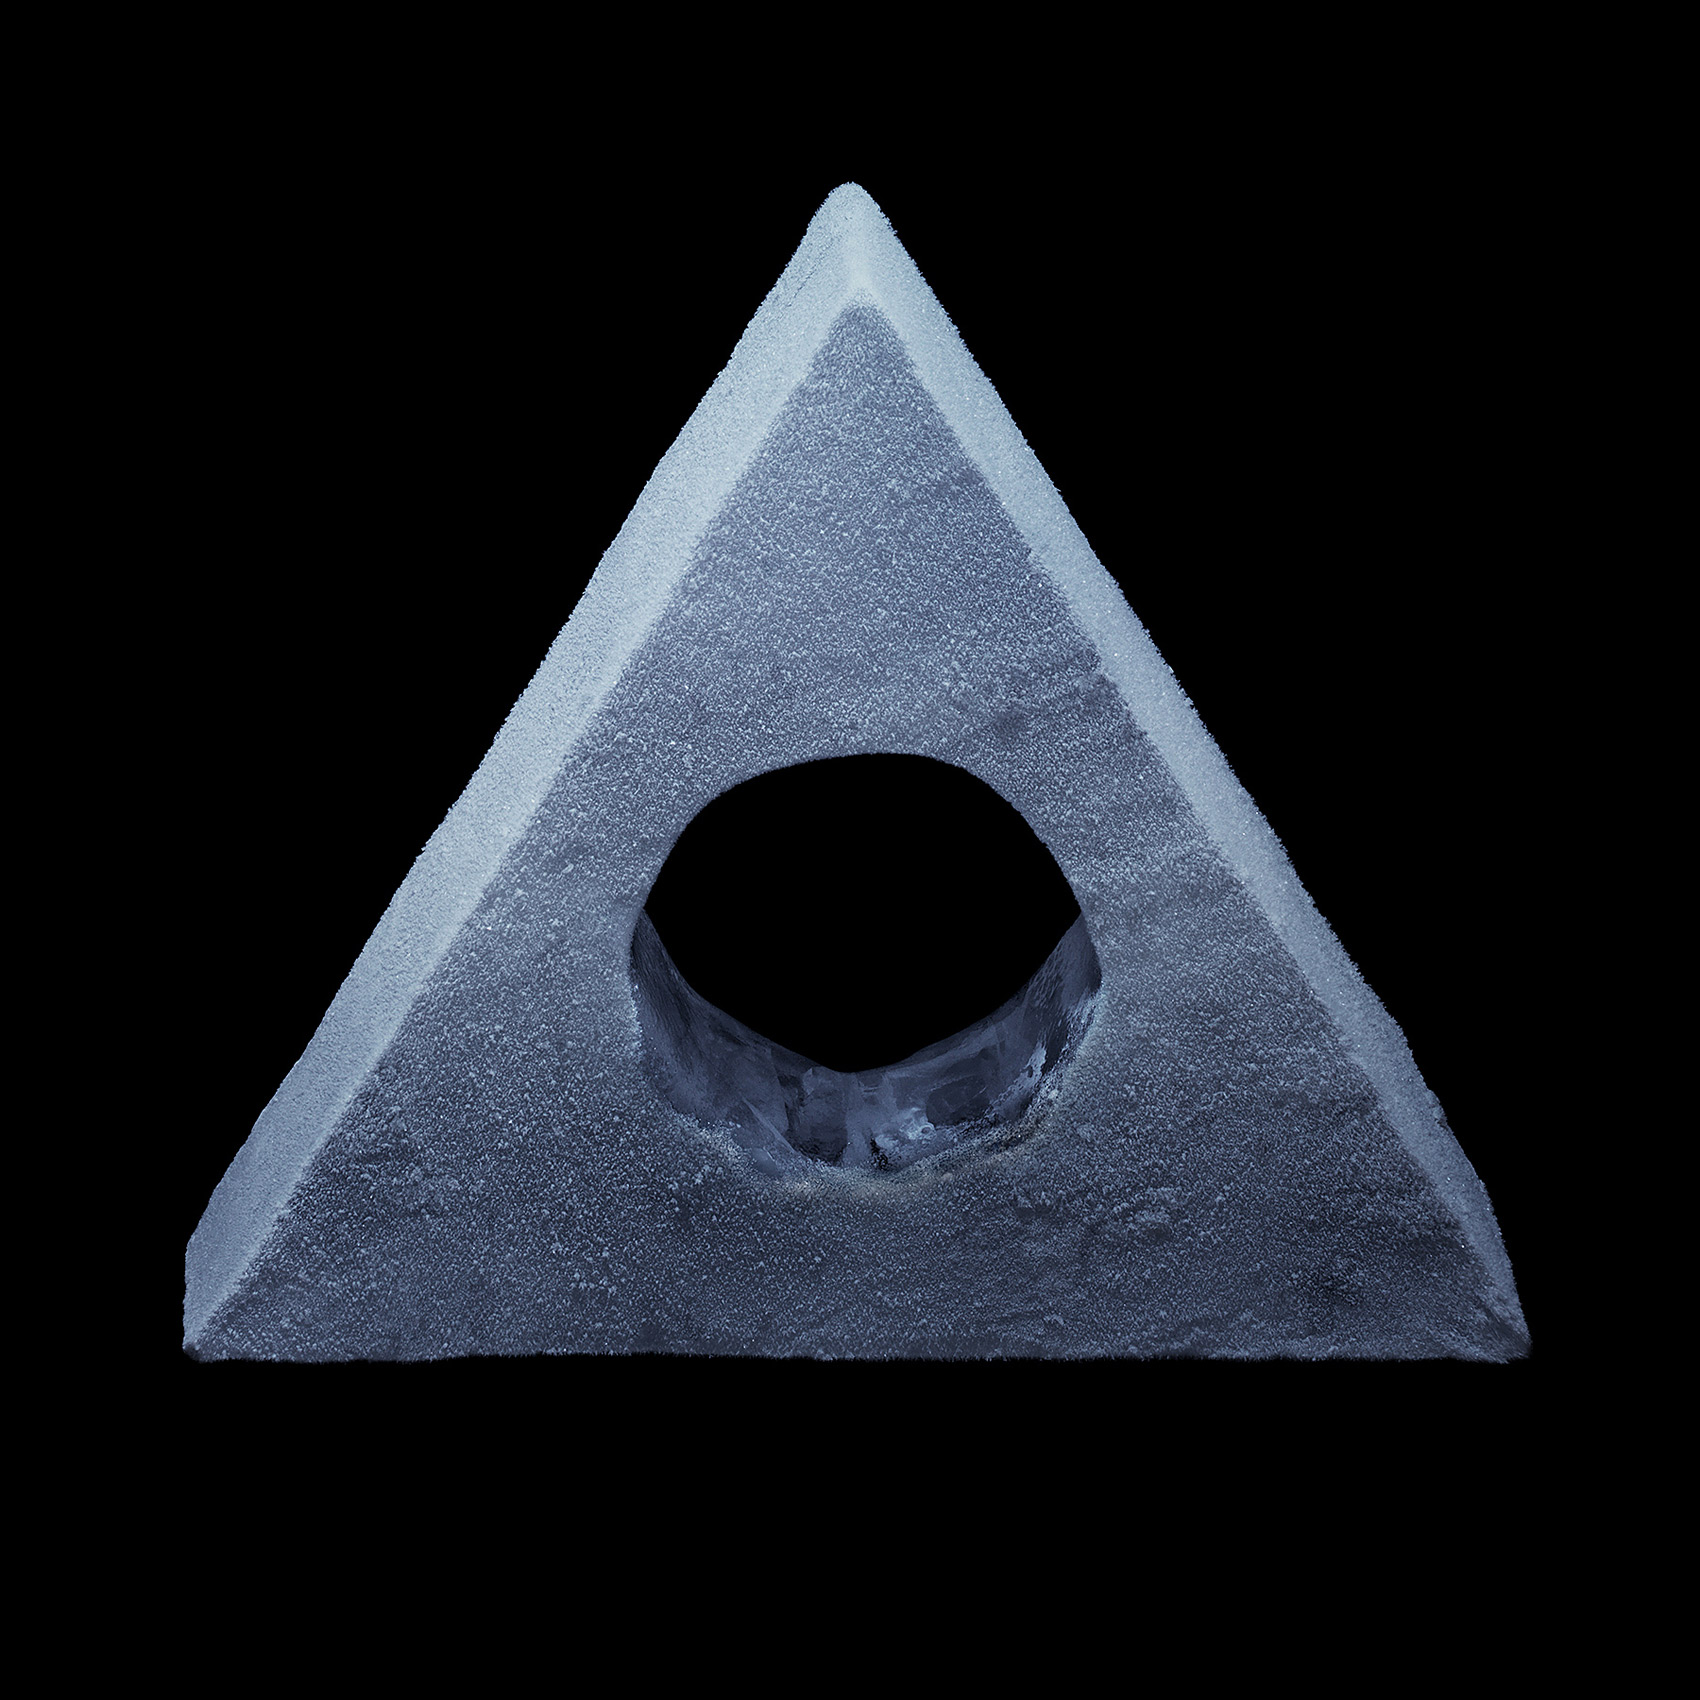 Nick_Rees-ICE-Triangle